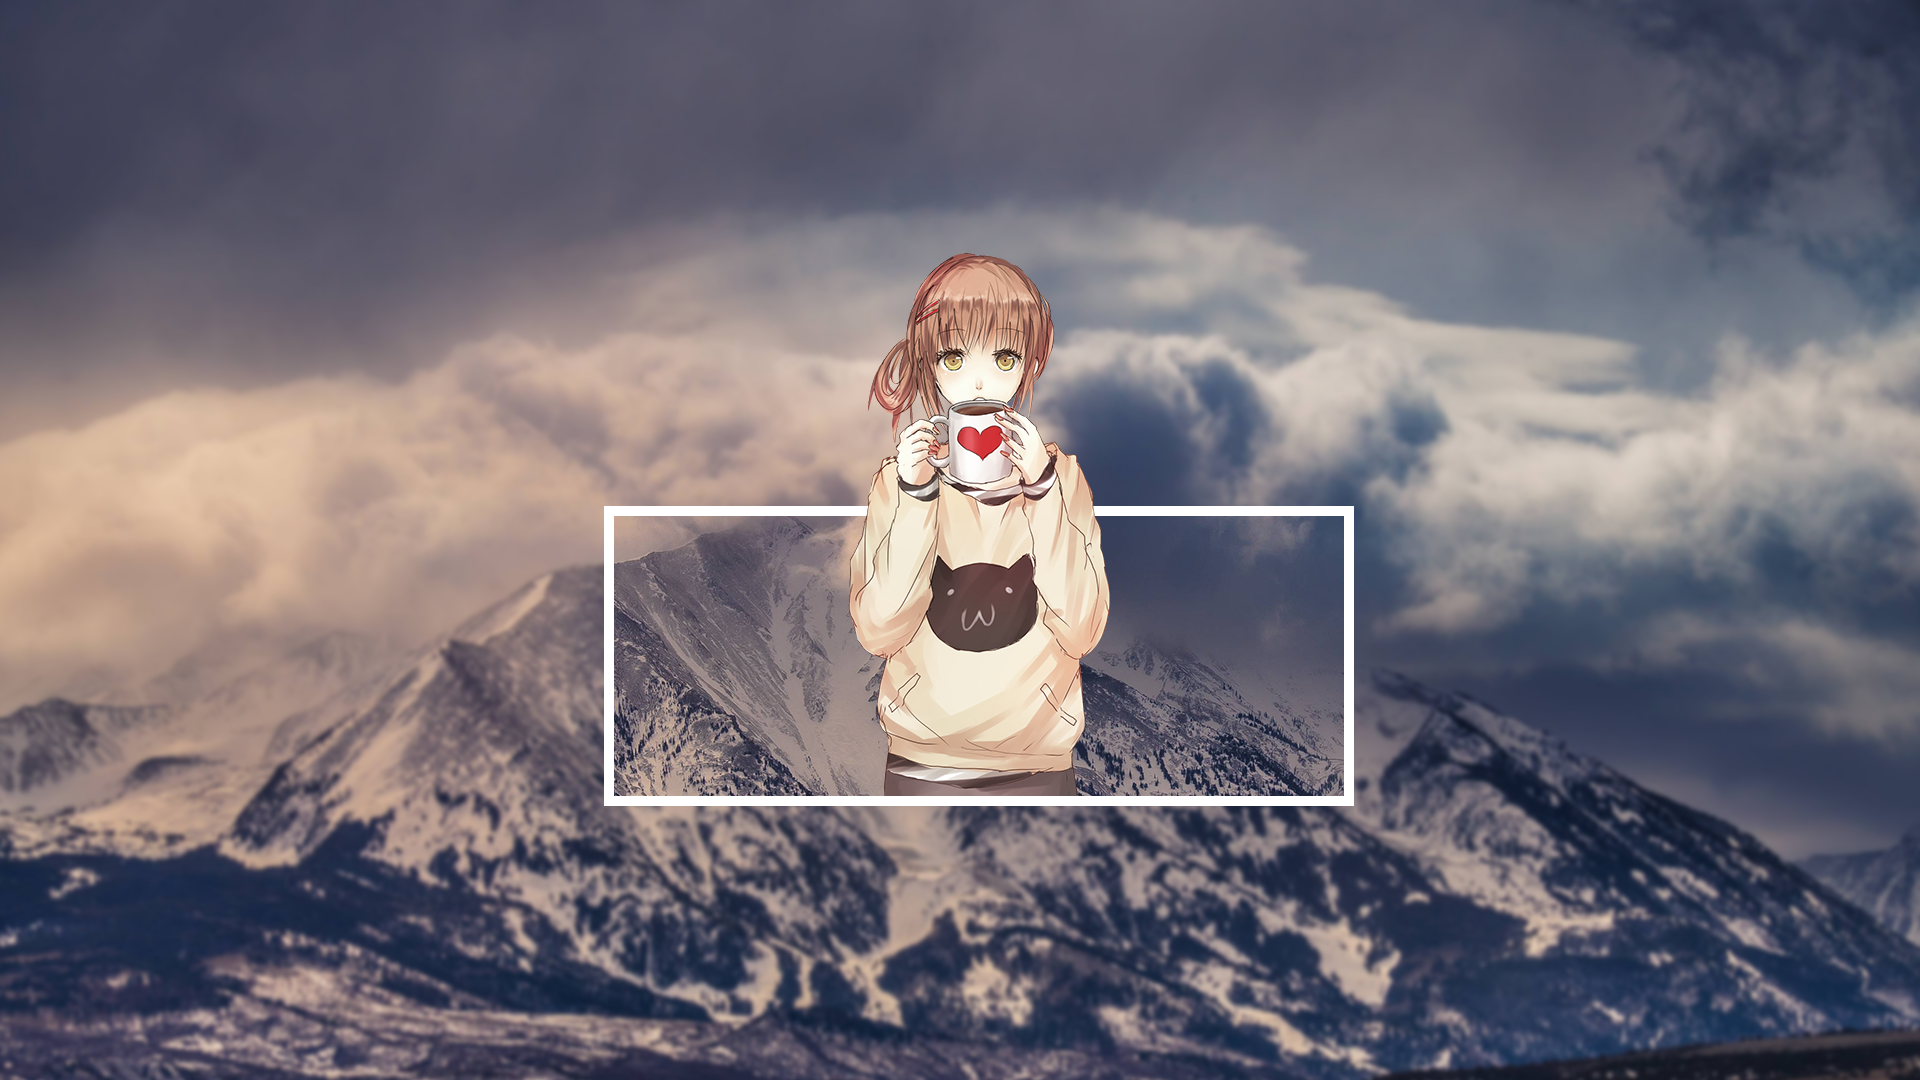 Wallpaper, sunlight, anime girls, nature, minimalism, sky, snow, winter, photography, blue, original characters, blurred, summit, cloud, photograph, image, mountainous landforms, mountain range 1920x1080